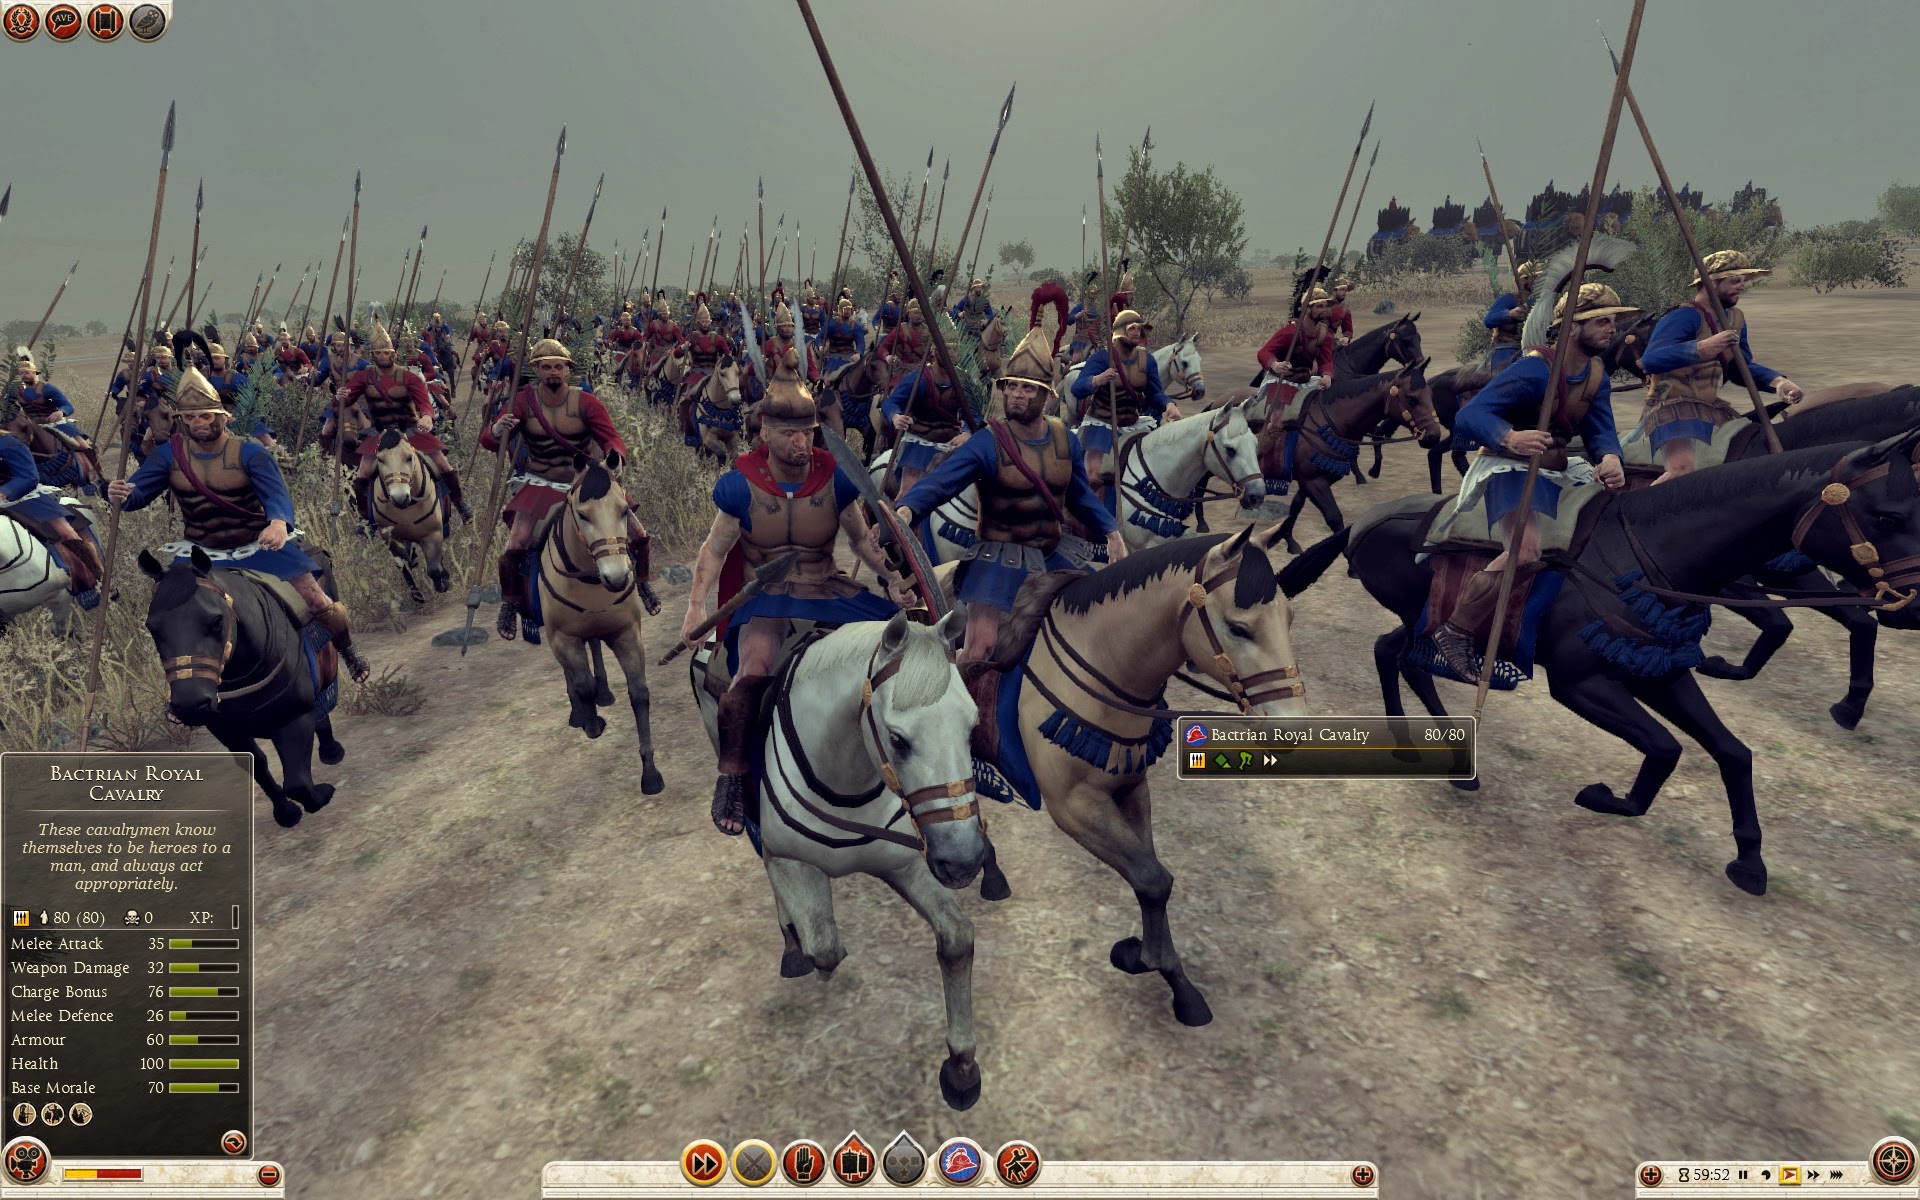 Bactrian Royal Cavalry